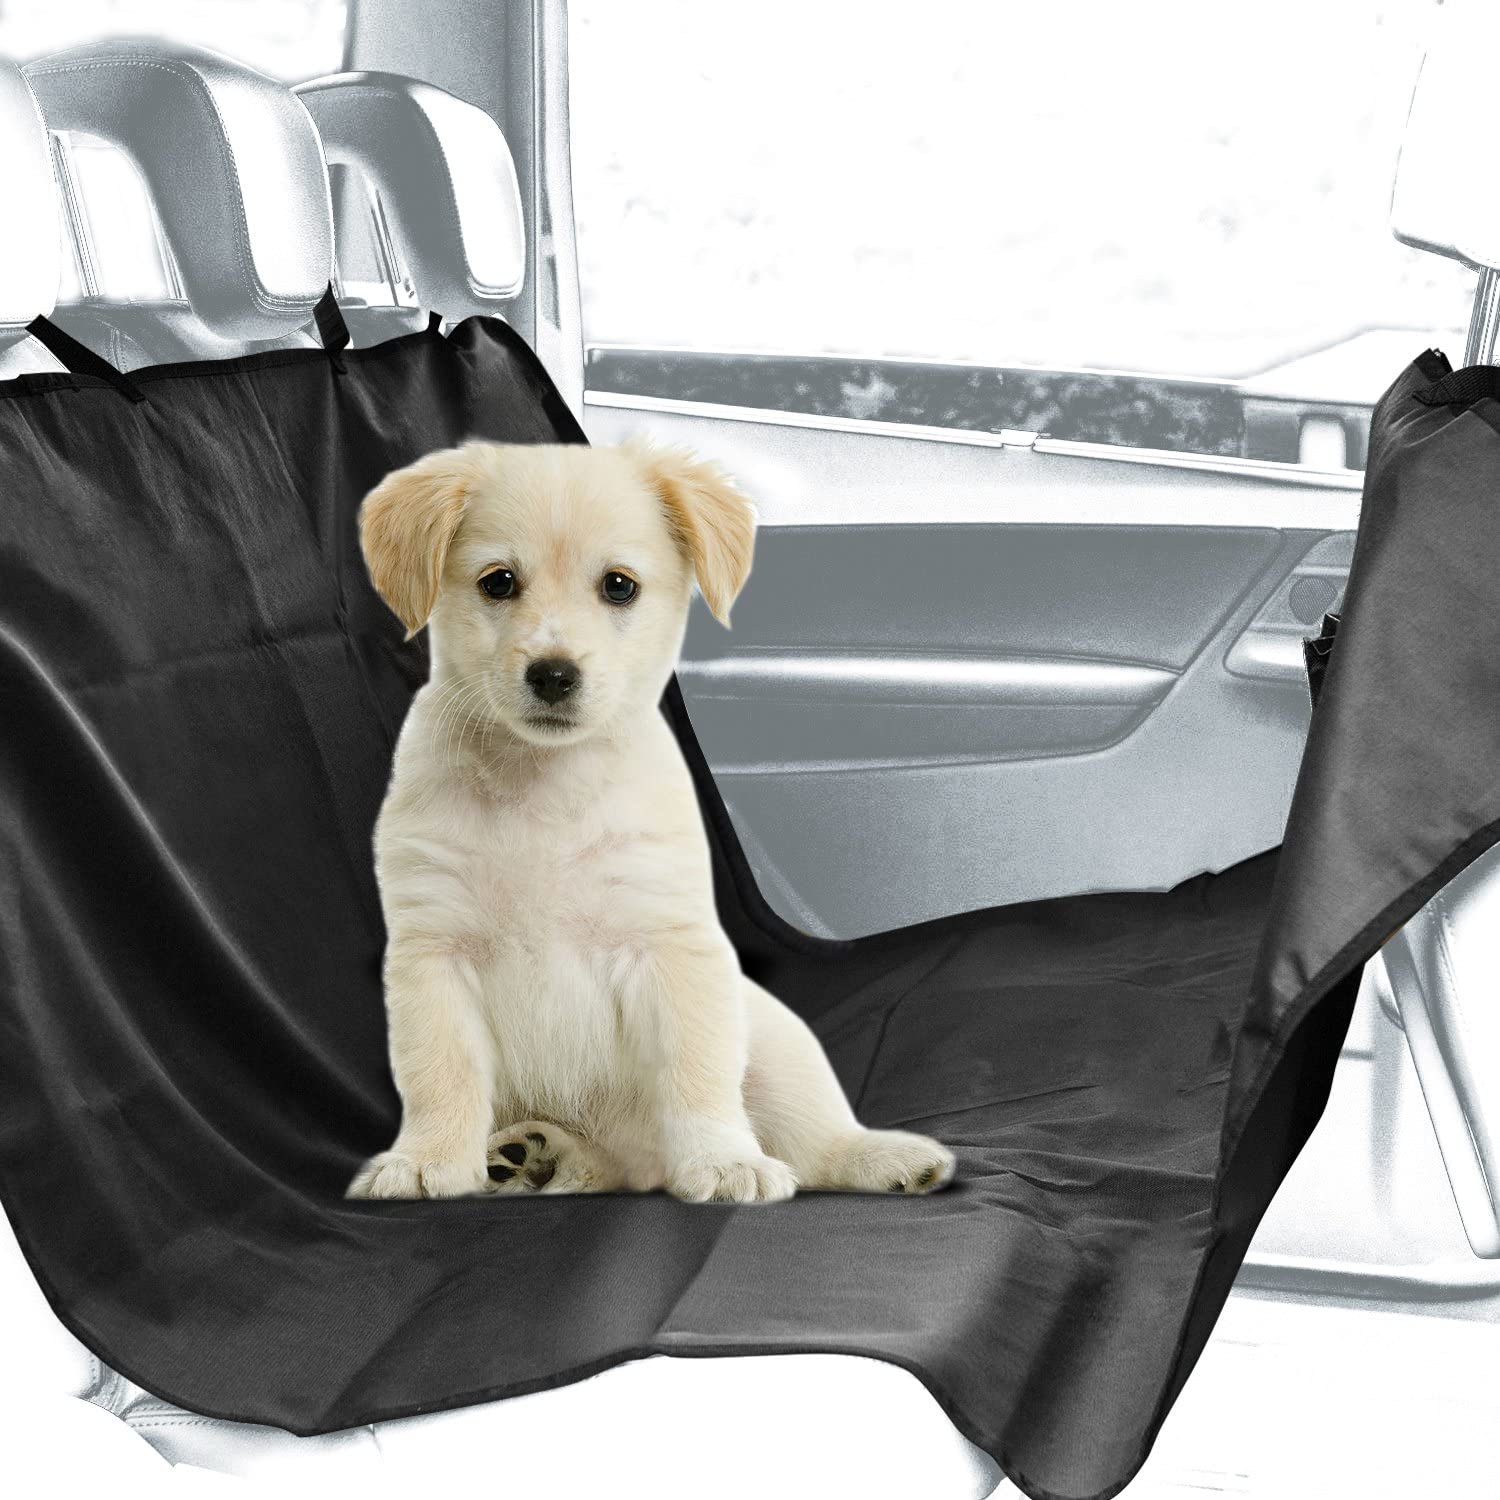  EUGAD Cubierta Asientos de Coche para Perros Universal Funda de Asientos para Mascotas para Viajes Impermeable Antideslizante 600D Oxford 165 x 145 cm Negro 0001GD 